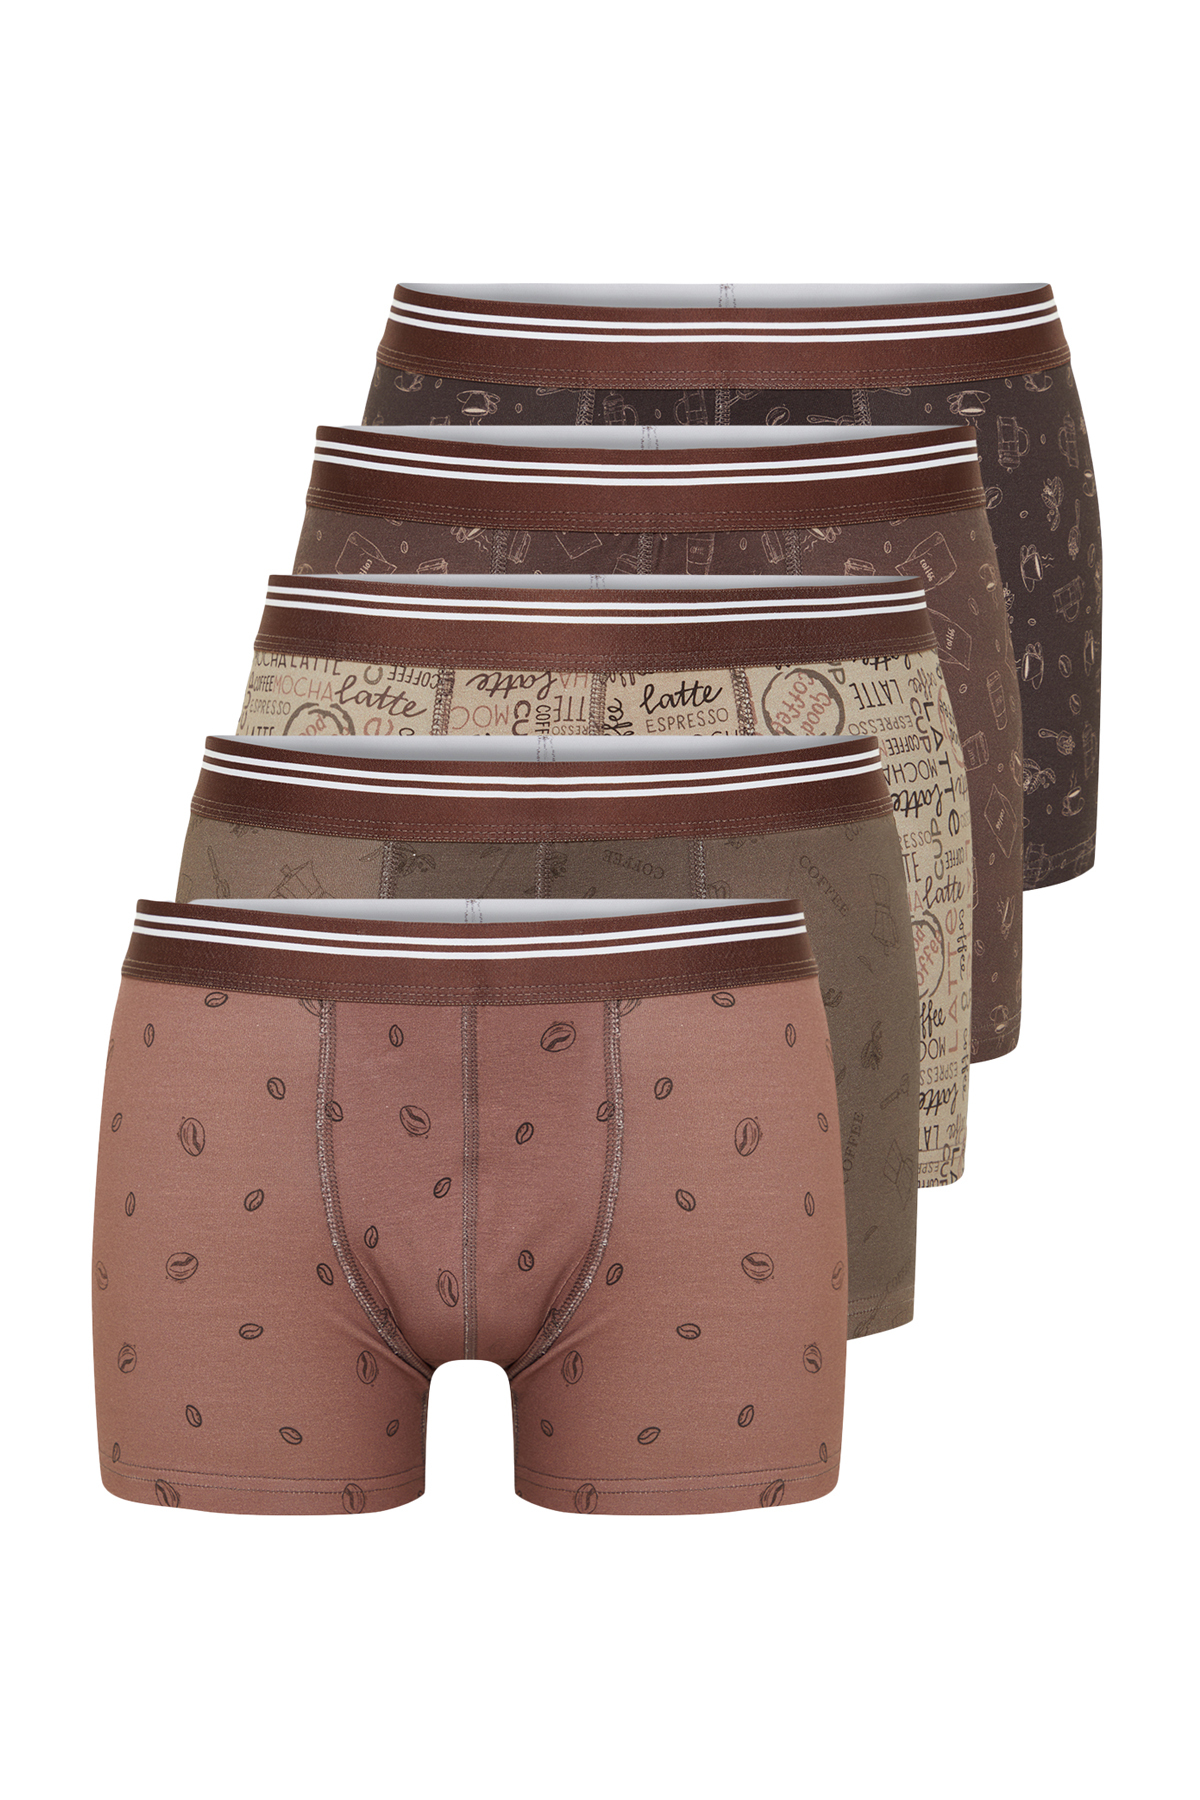 Trendyol Brown Men's 5 Pack Minimal Printed Cotton Boxers